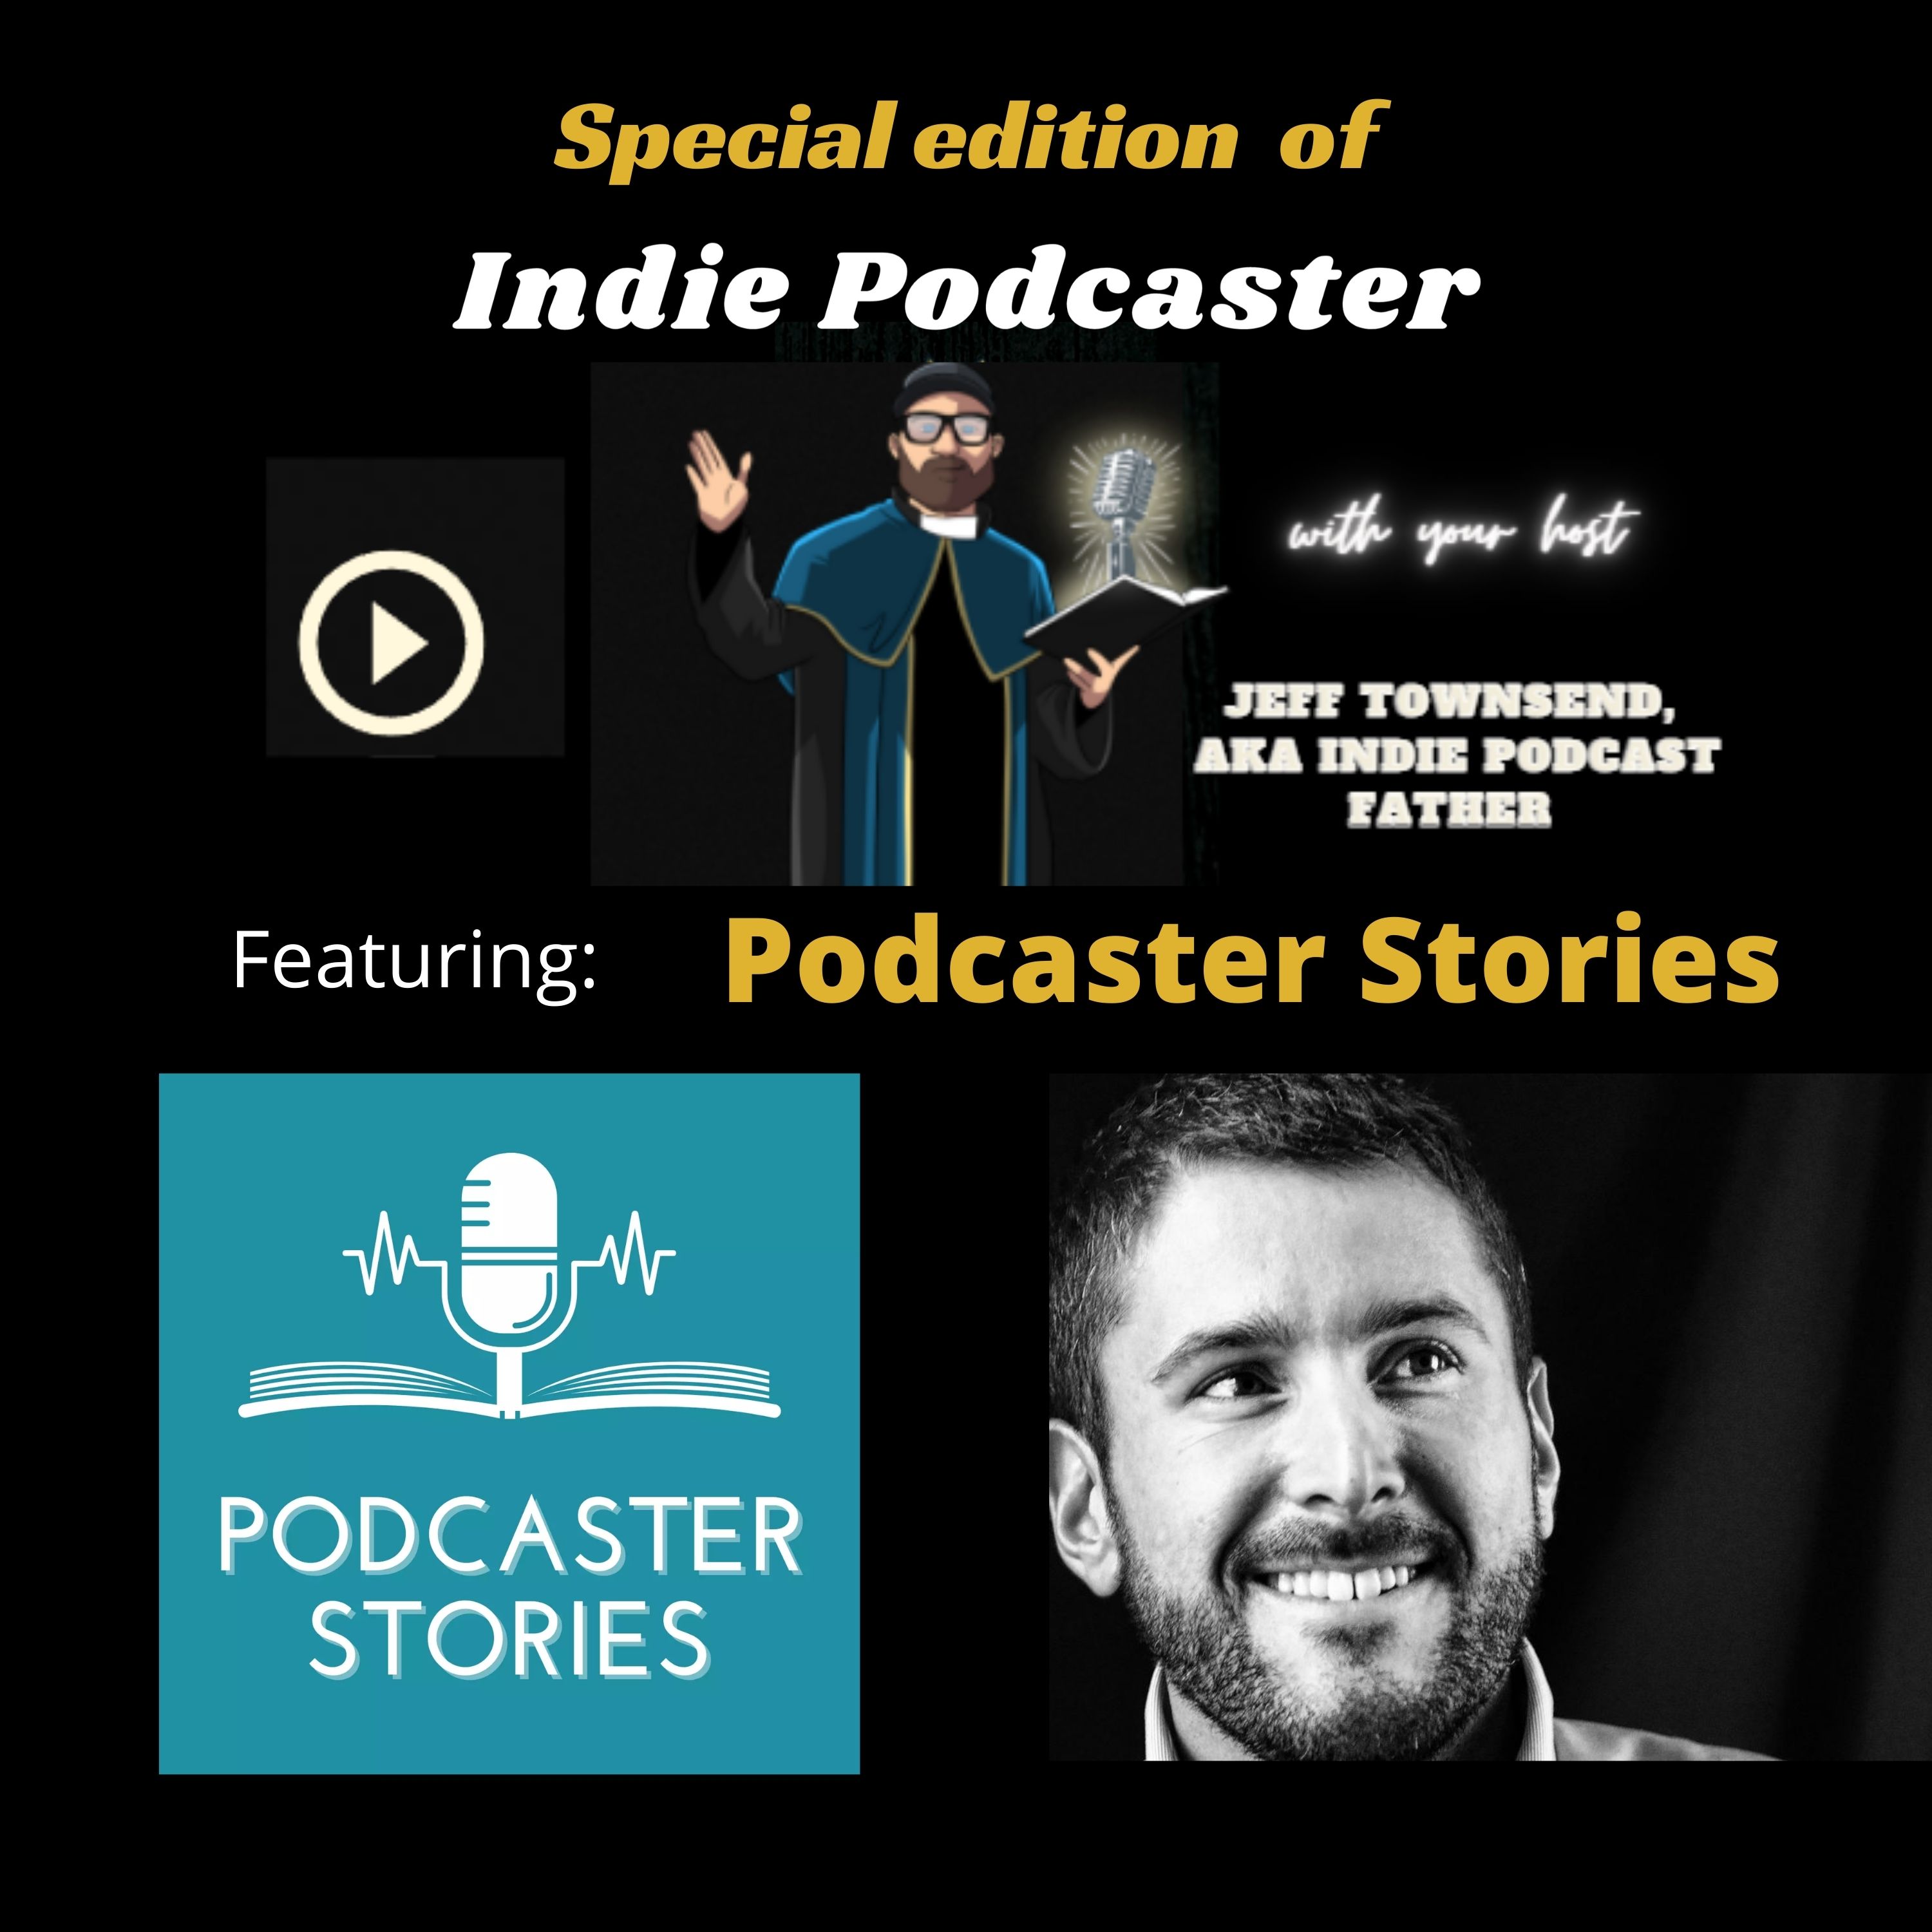 Podcaster Stories episode with Matt Medeiros Image